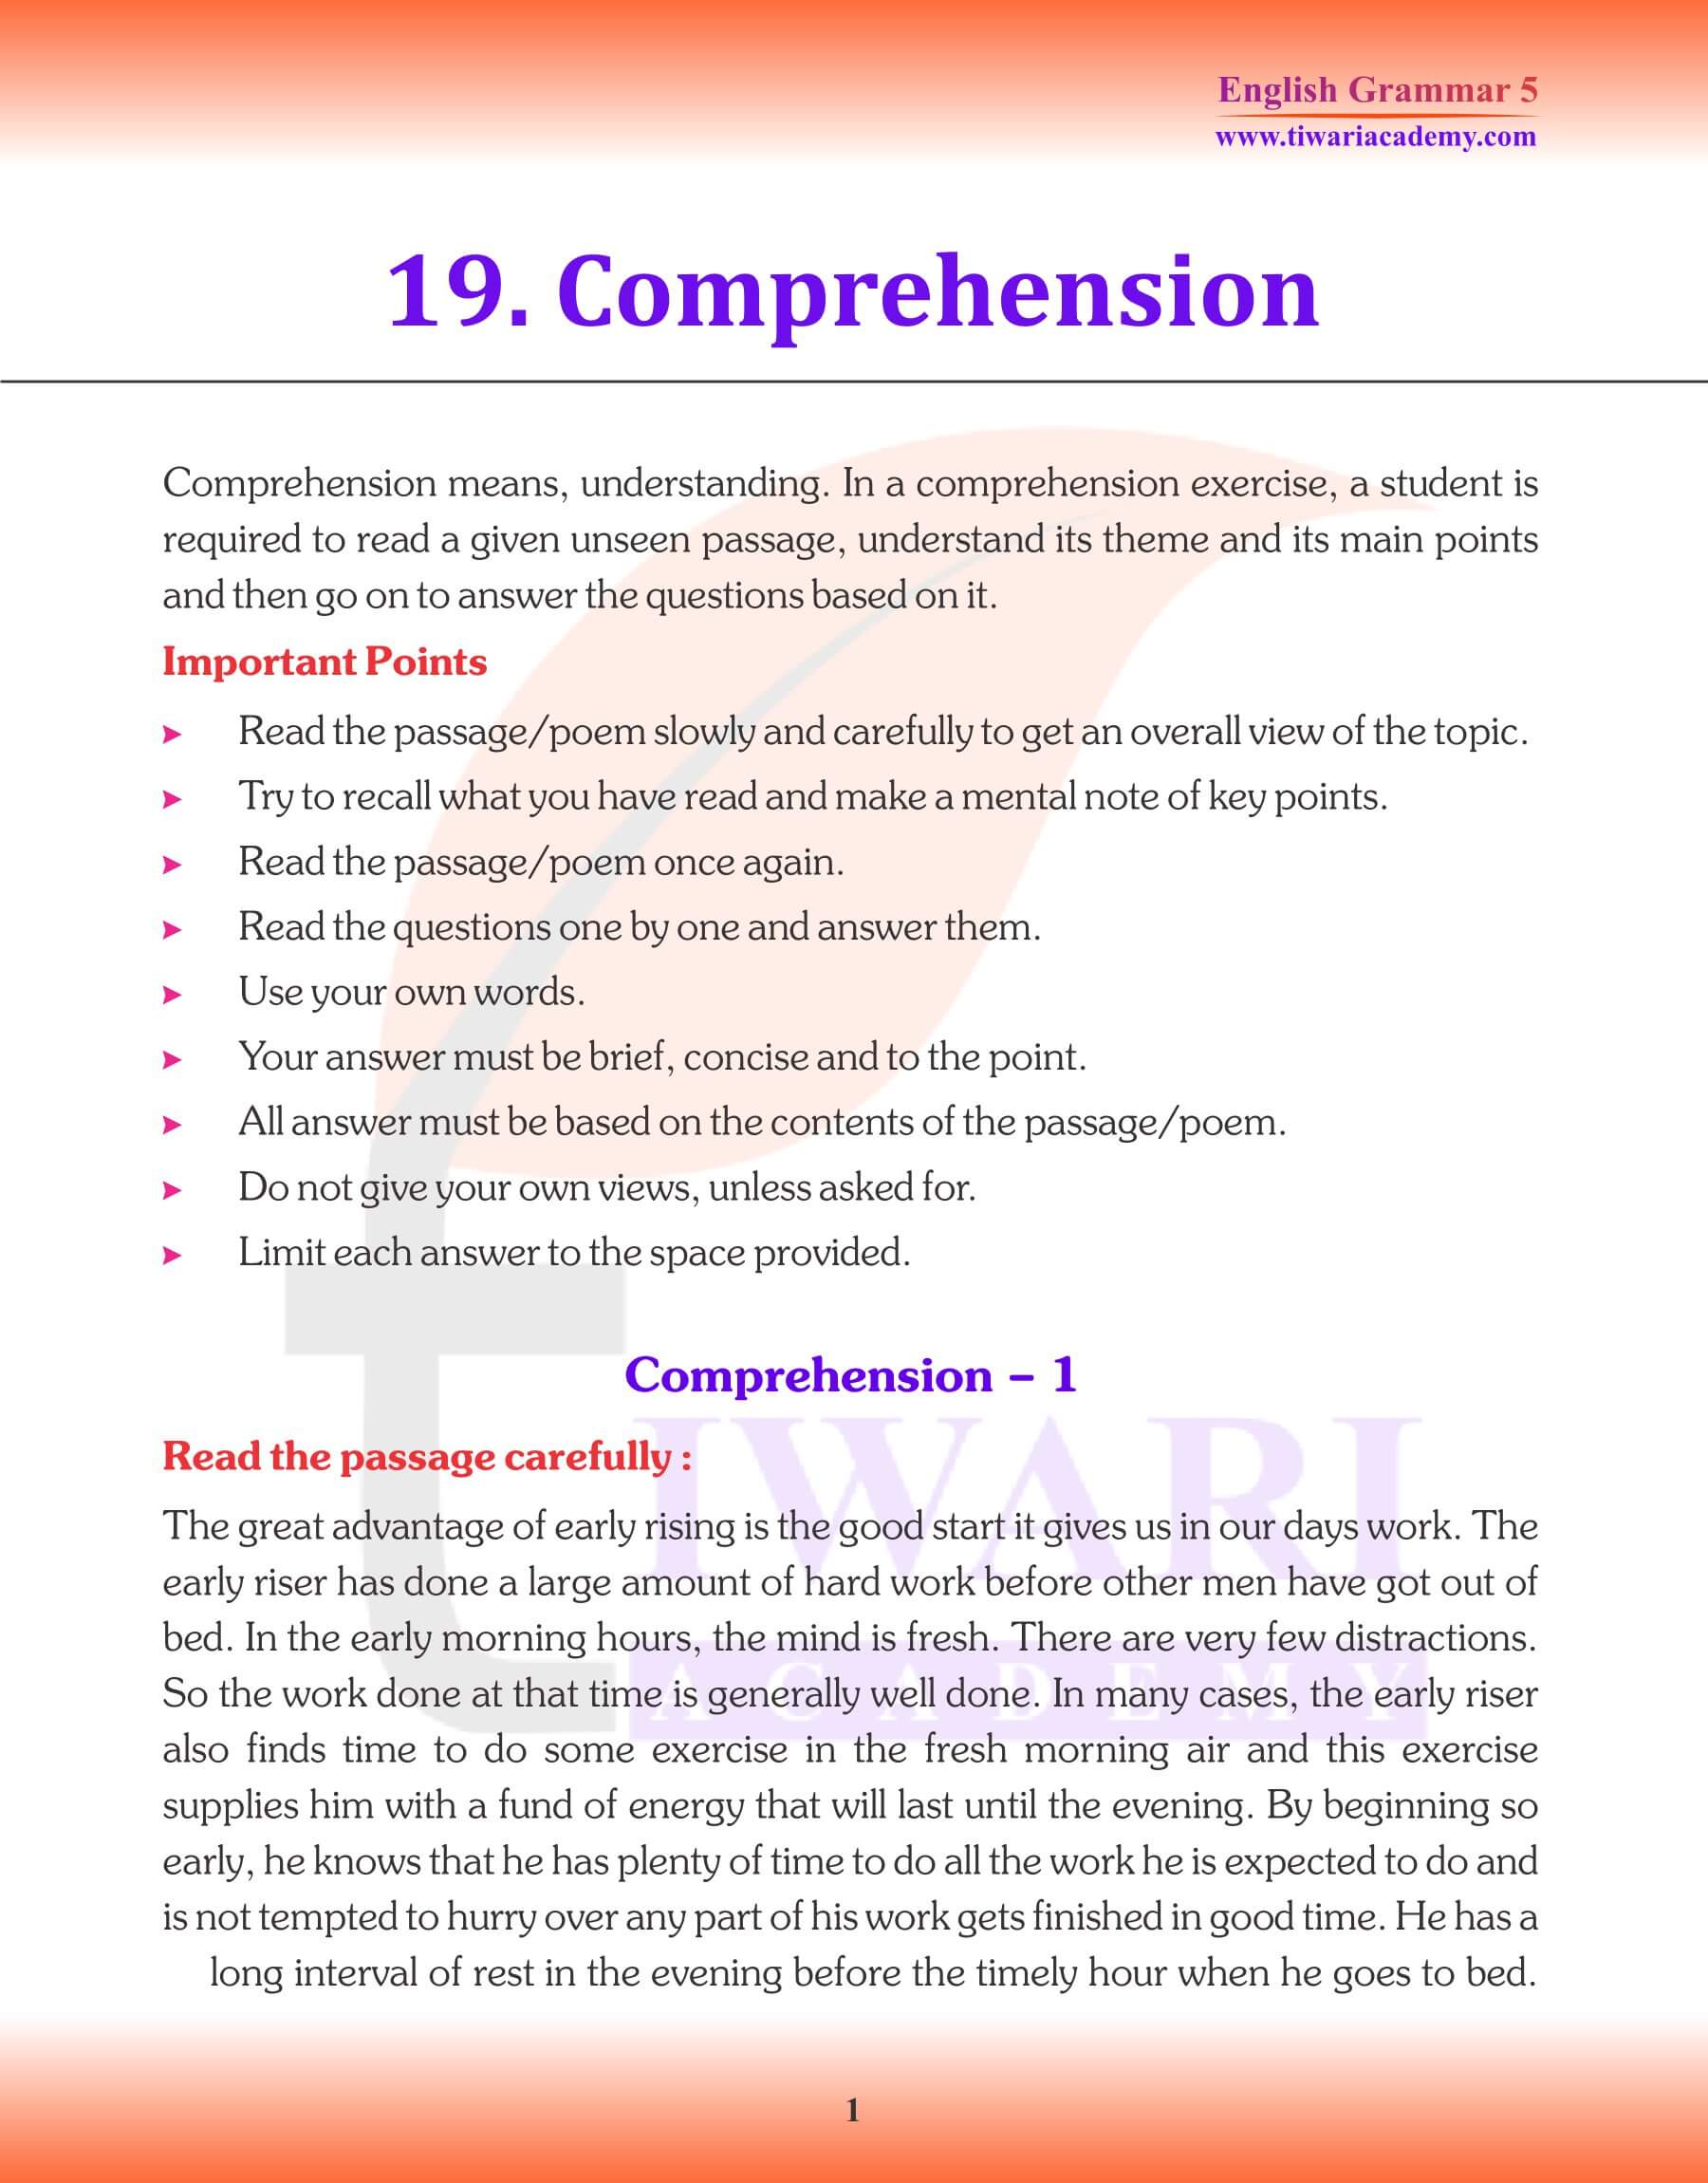 Class 5 English Grammar Comprehension Passages Revision Book